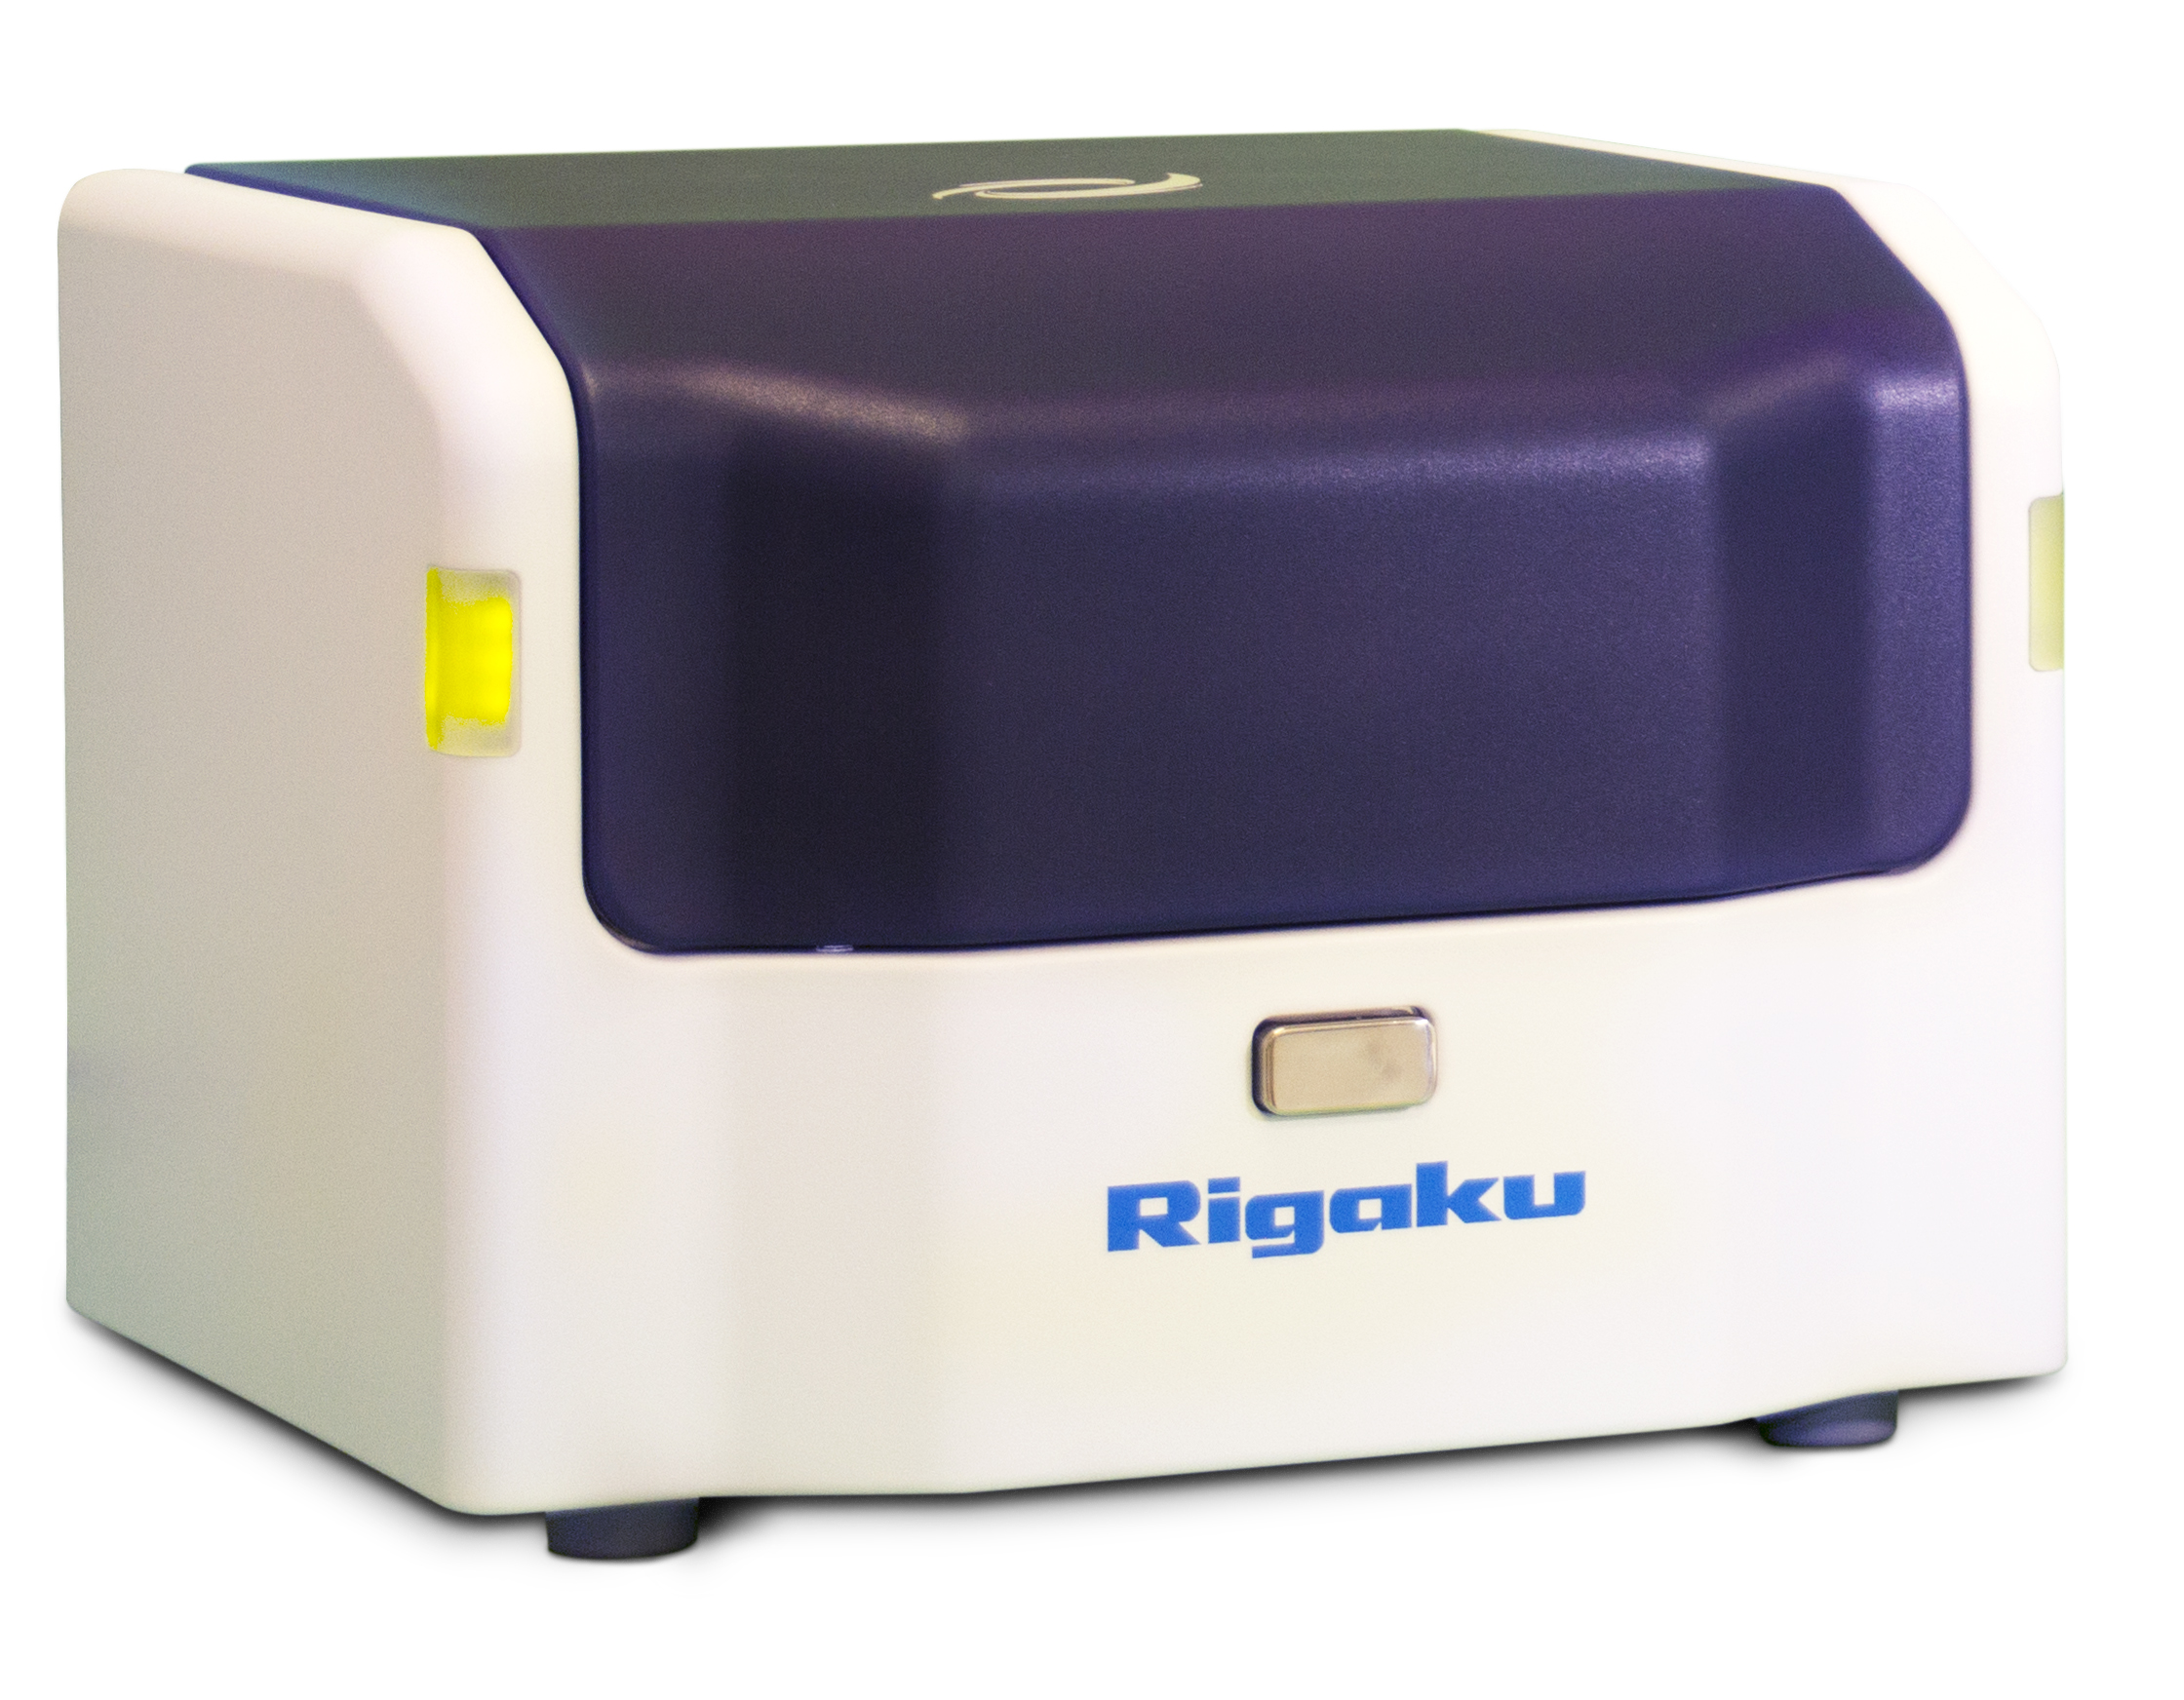 Rigaku NEX DE VS - Variable Spot Energy Dispersive X-ray Fluorescence Spectrometer